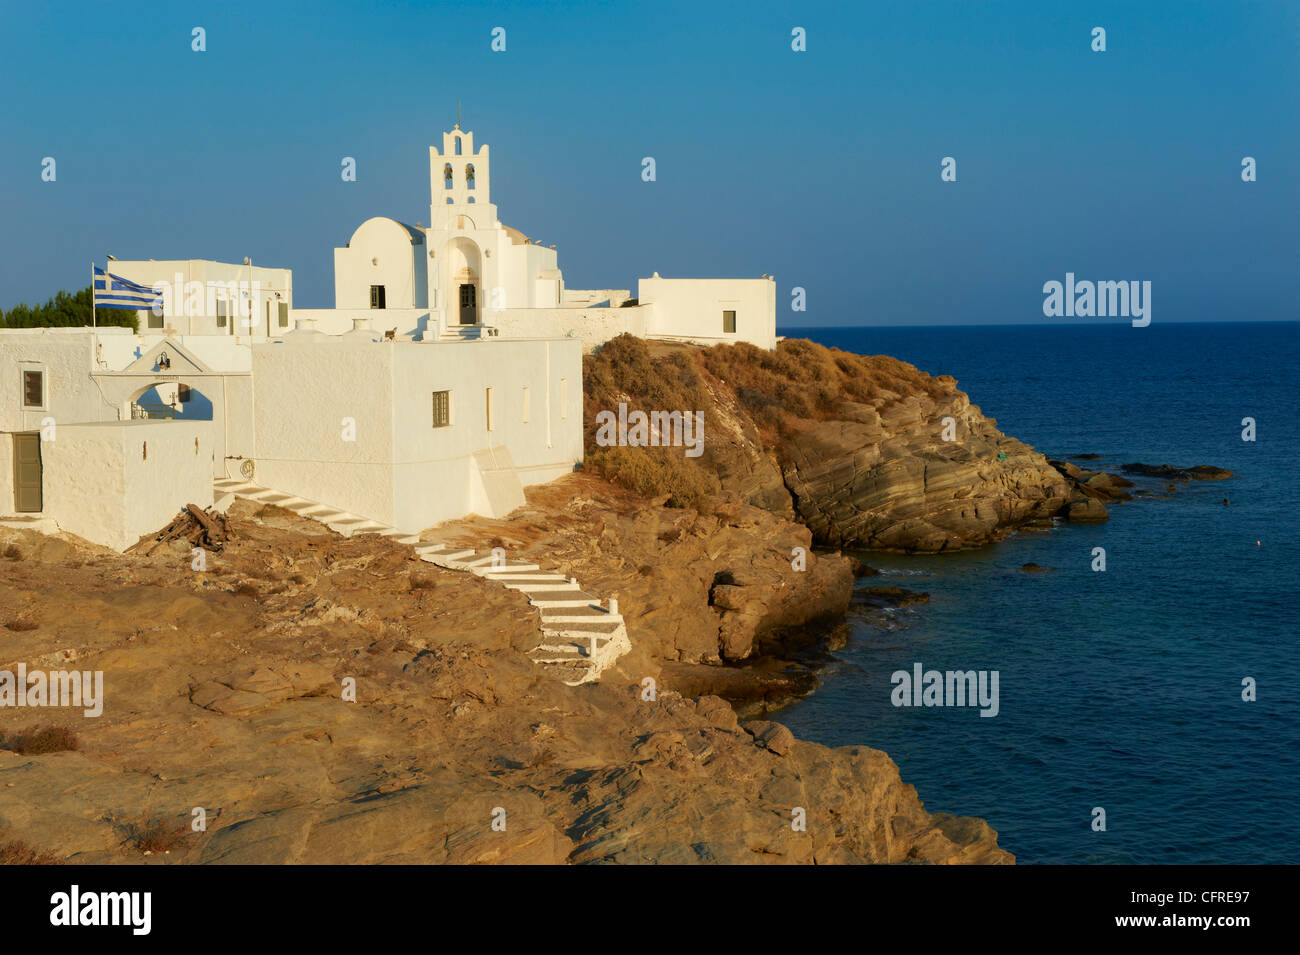 Panagia Chryssopigi Kloster, Sifnos, Cyclades Inseln, griechische Inseln, Ägäis, Griechenland, Europa Stockfoto